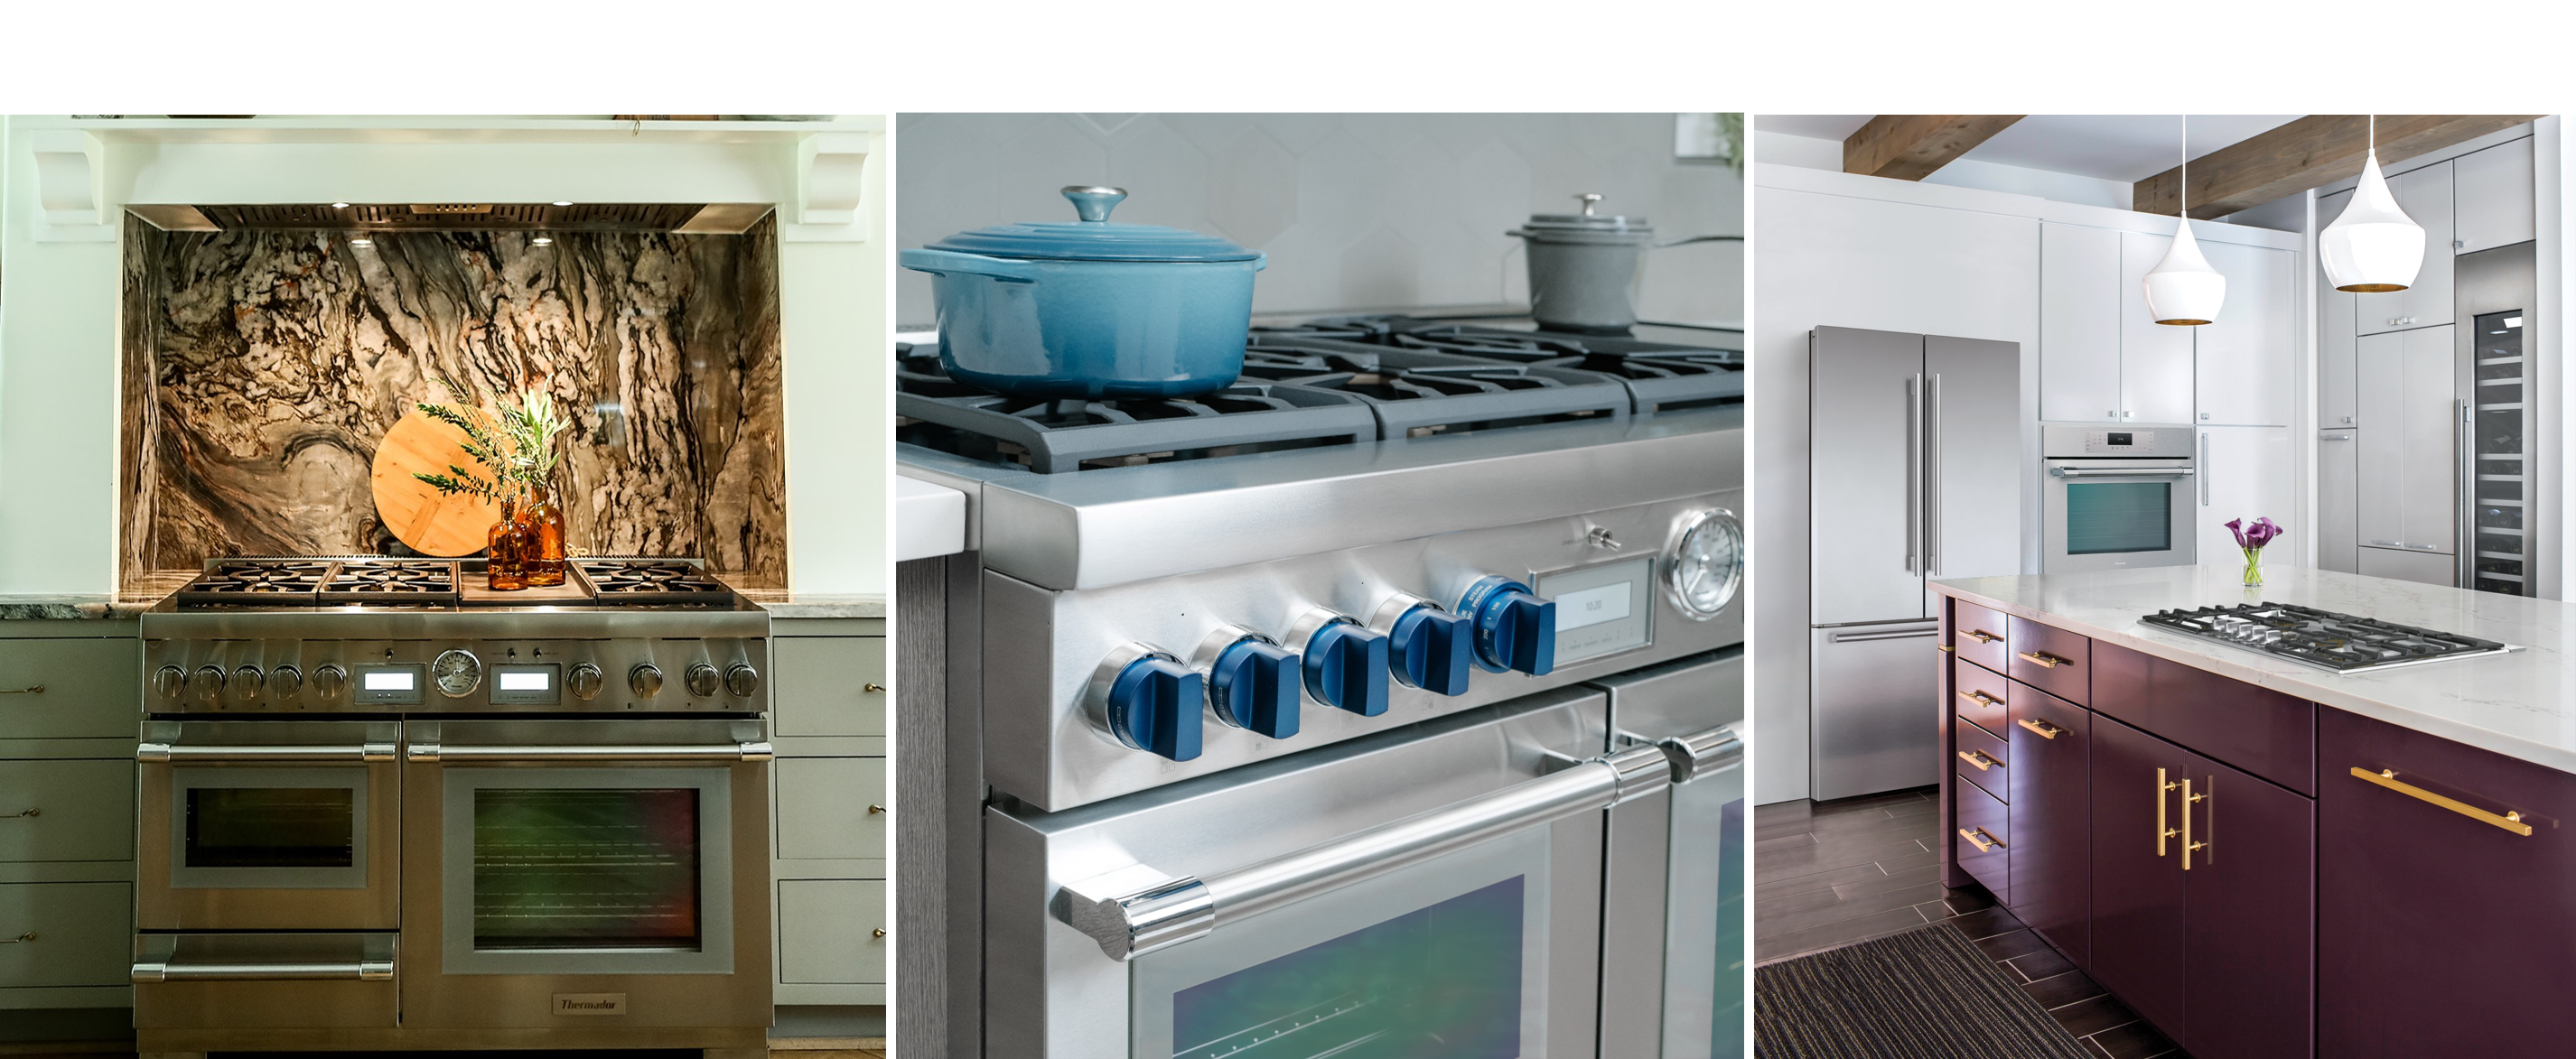 New Thermador Kitchen Appliances